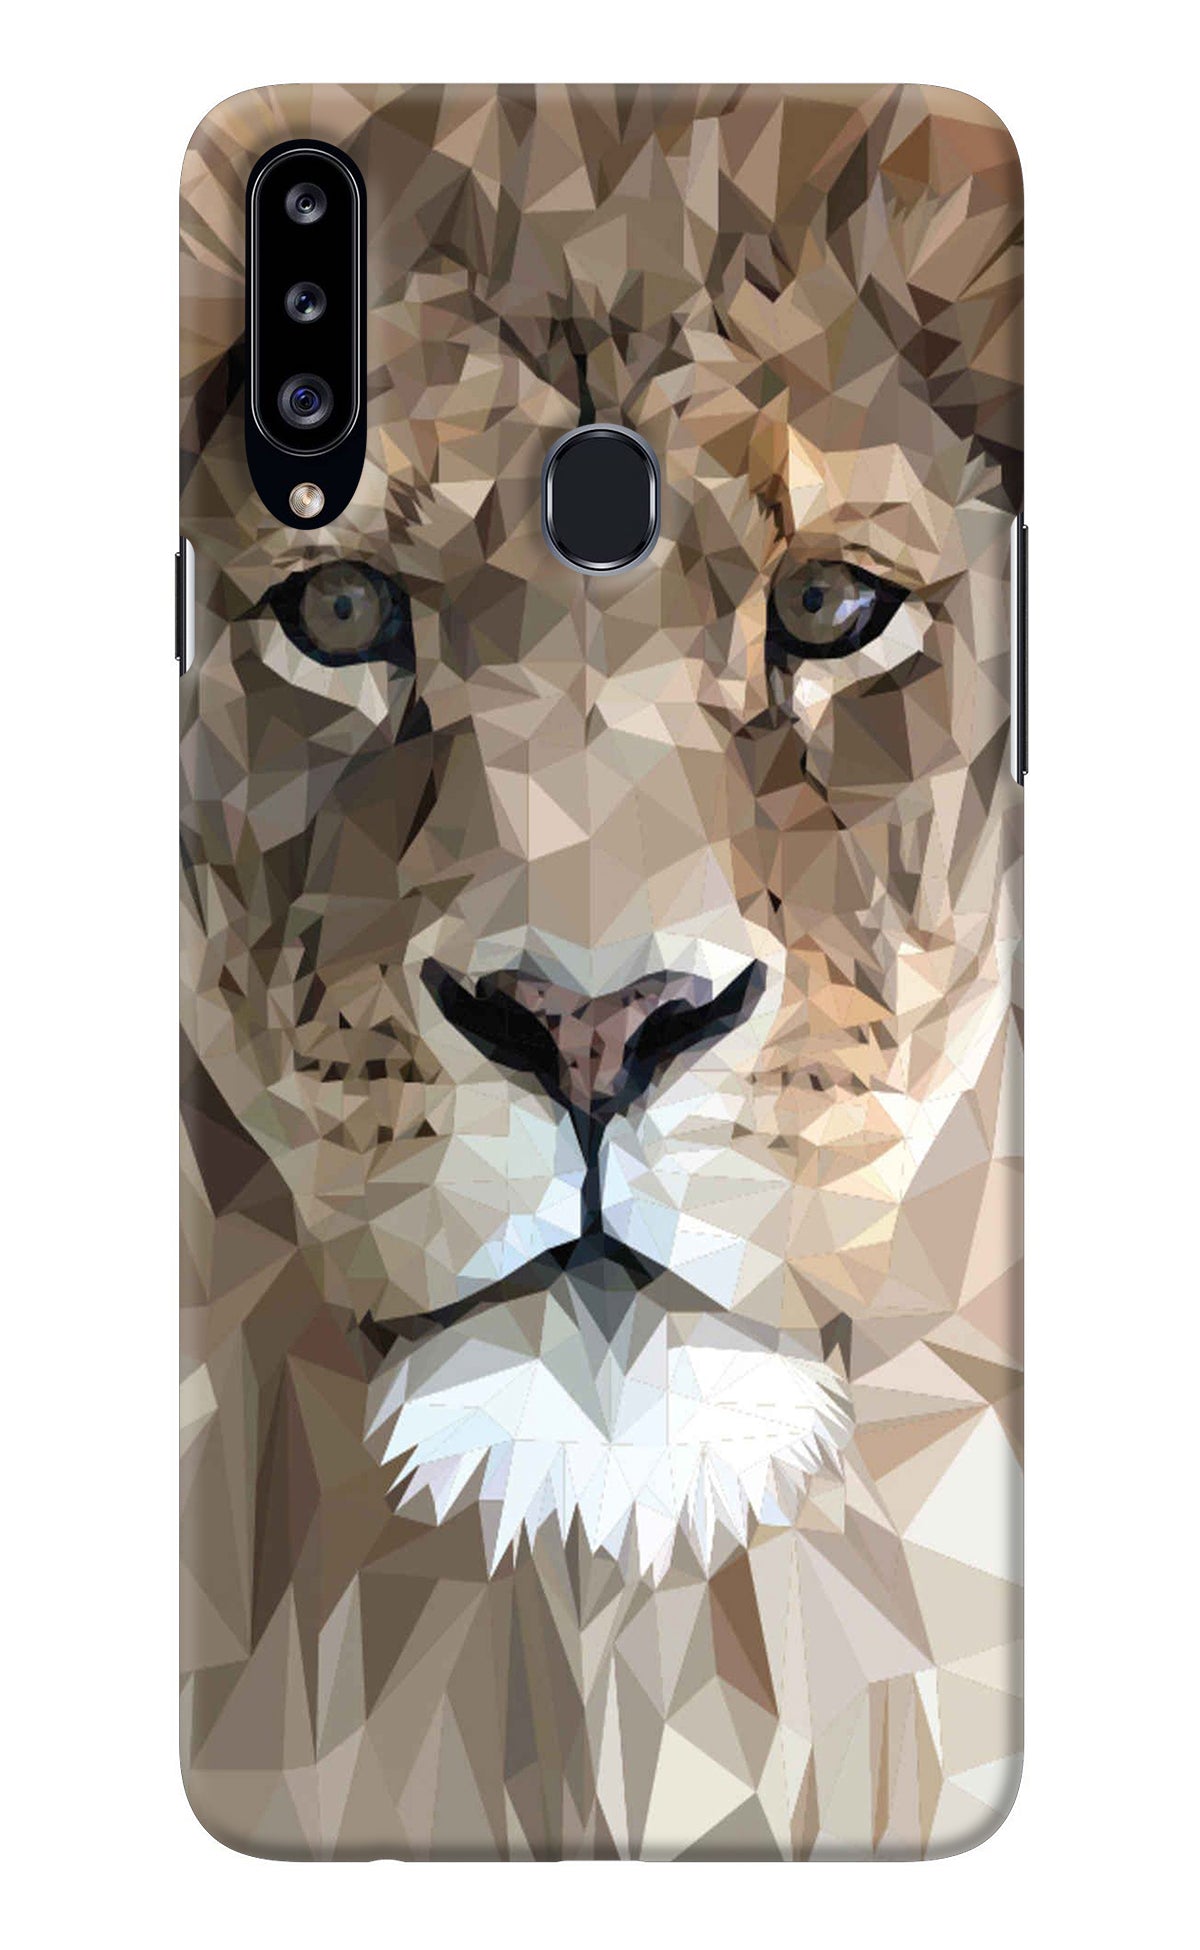 Lion Art Samsung A20s Back Cover